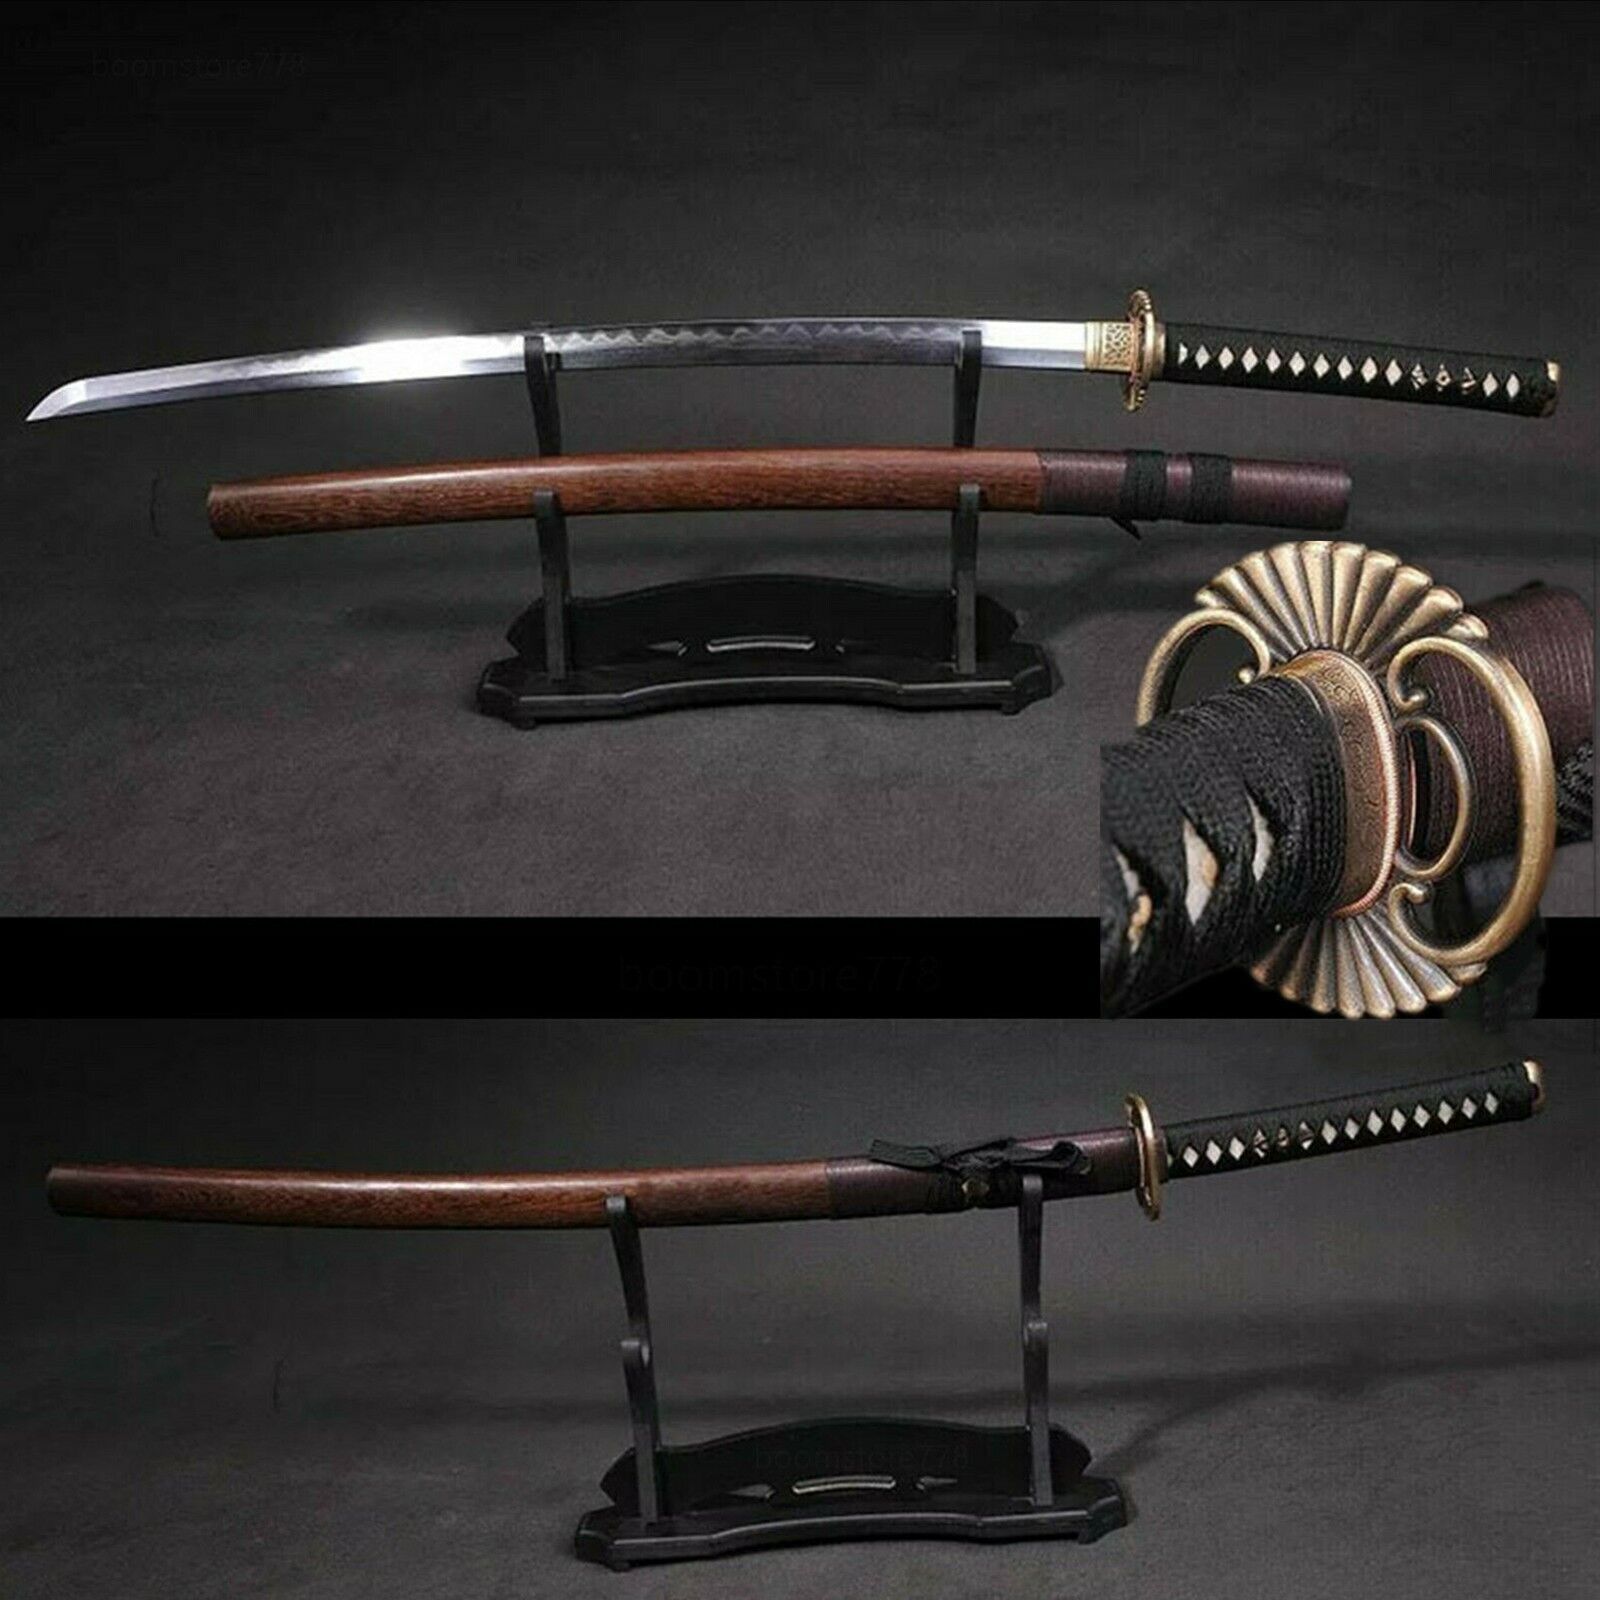  HANDMADE CLAY TEMPERED FOLDED STEEL JAPANESE SAMURAI KATANA SWORD FULL TANG